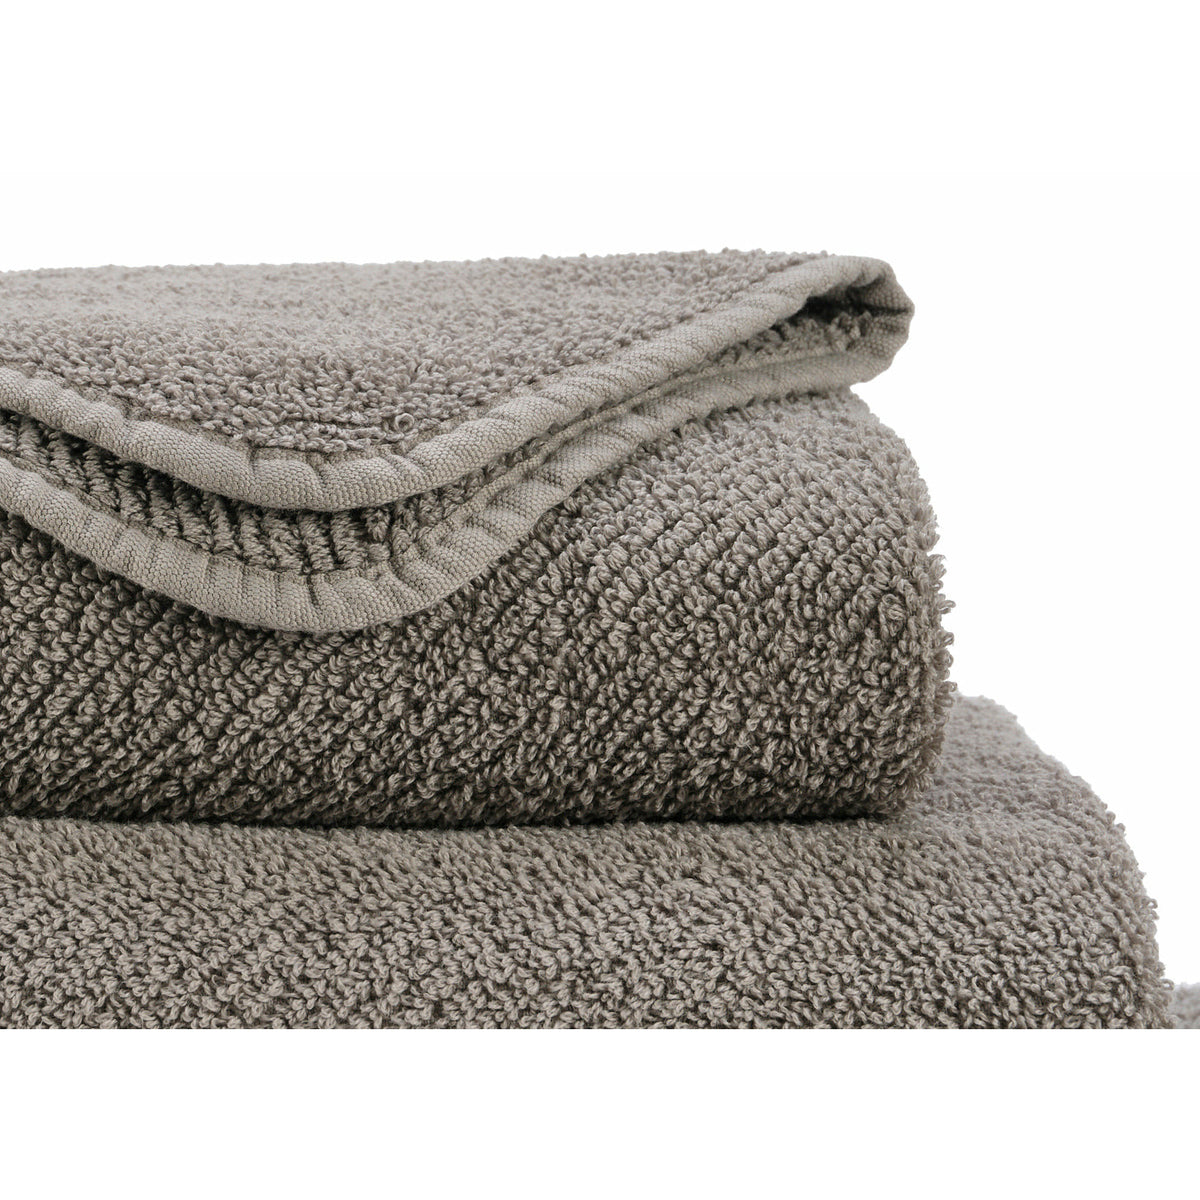 Abyss Super Twill Bath Towels - Linen (770)